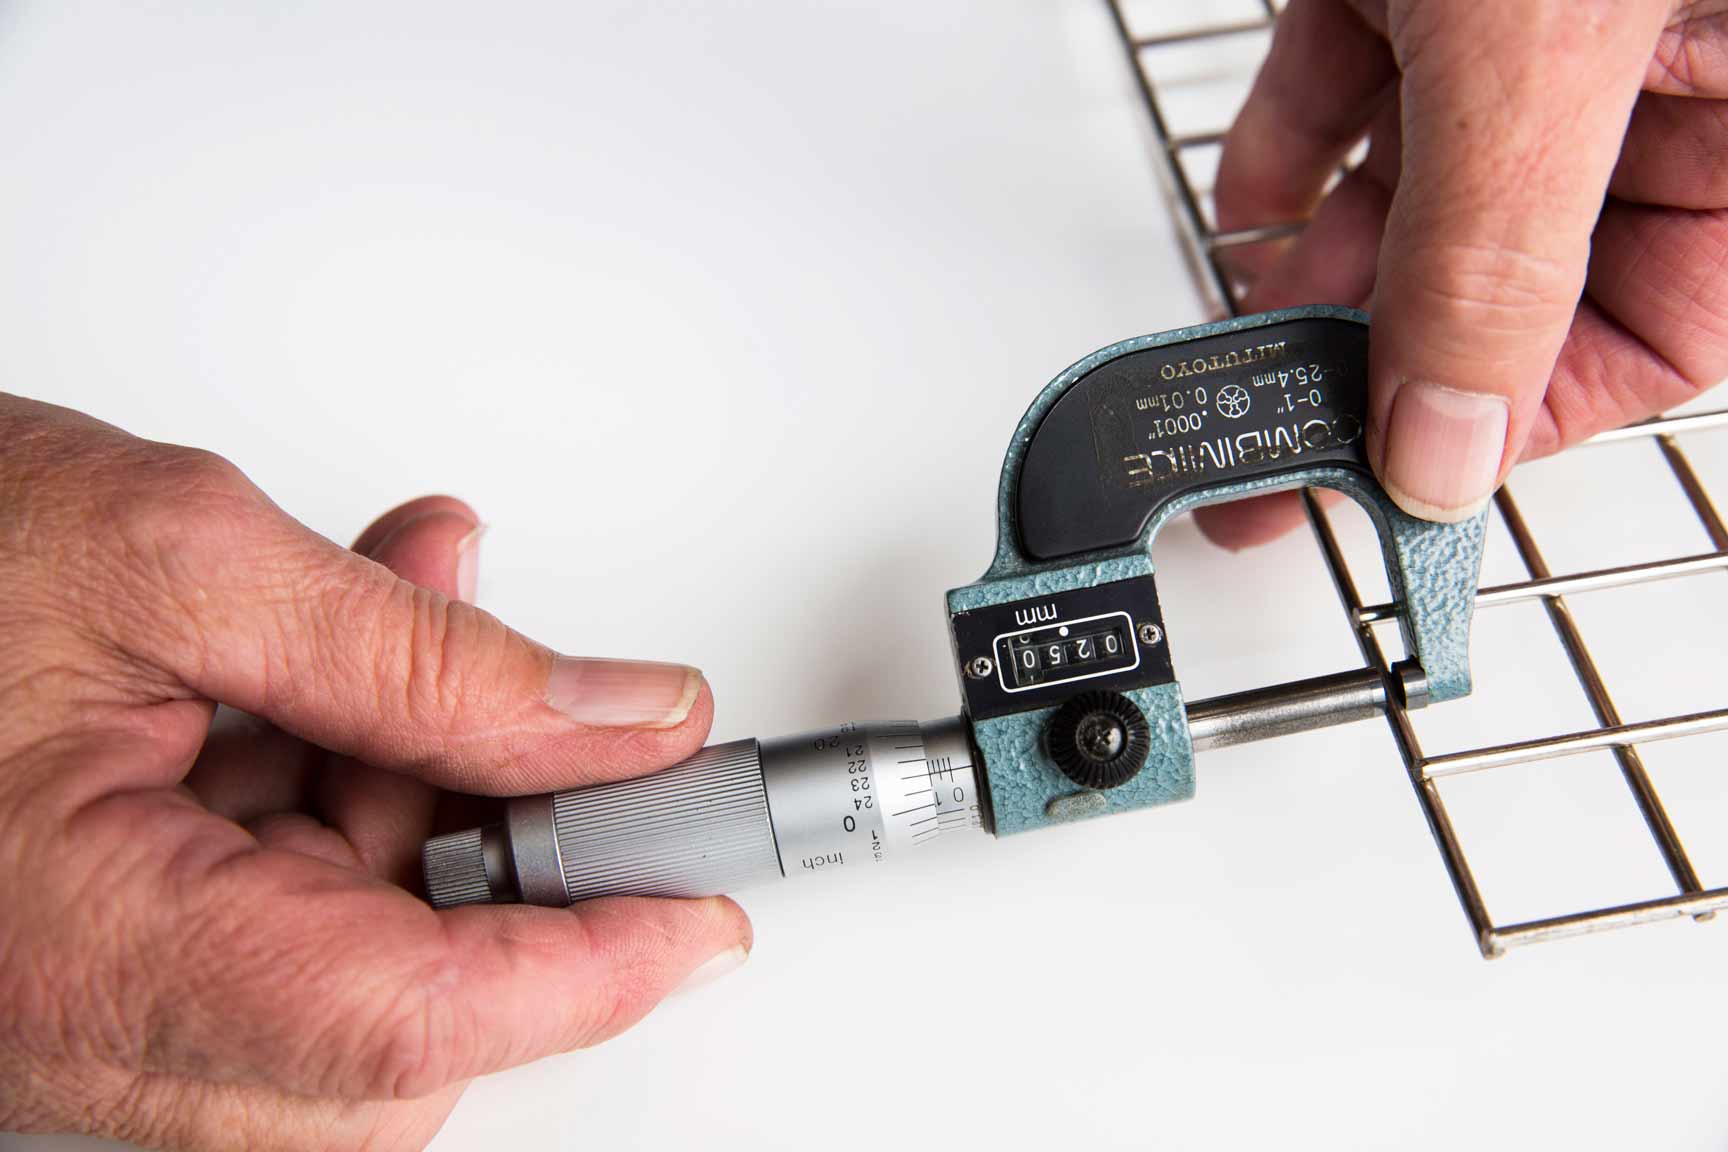 micrometer measuring stainless steel wire diameter